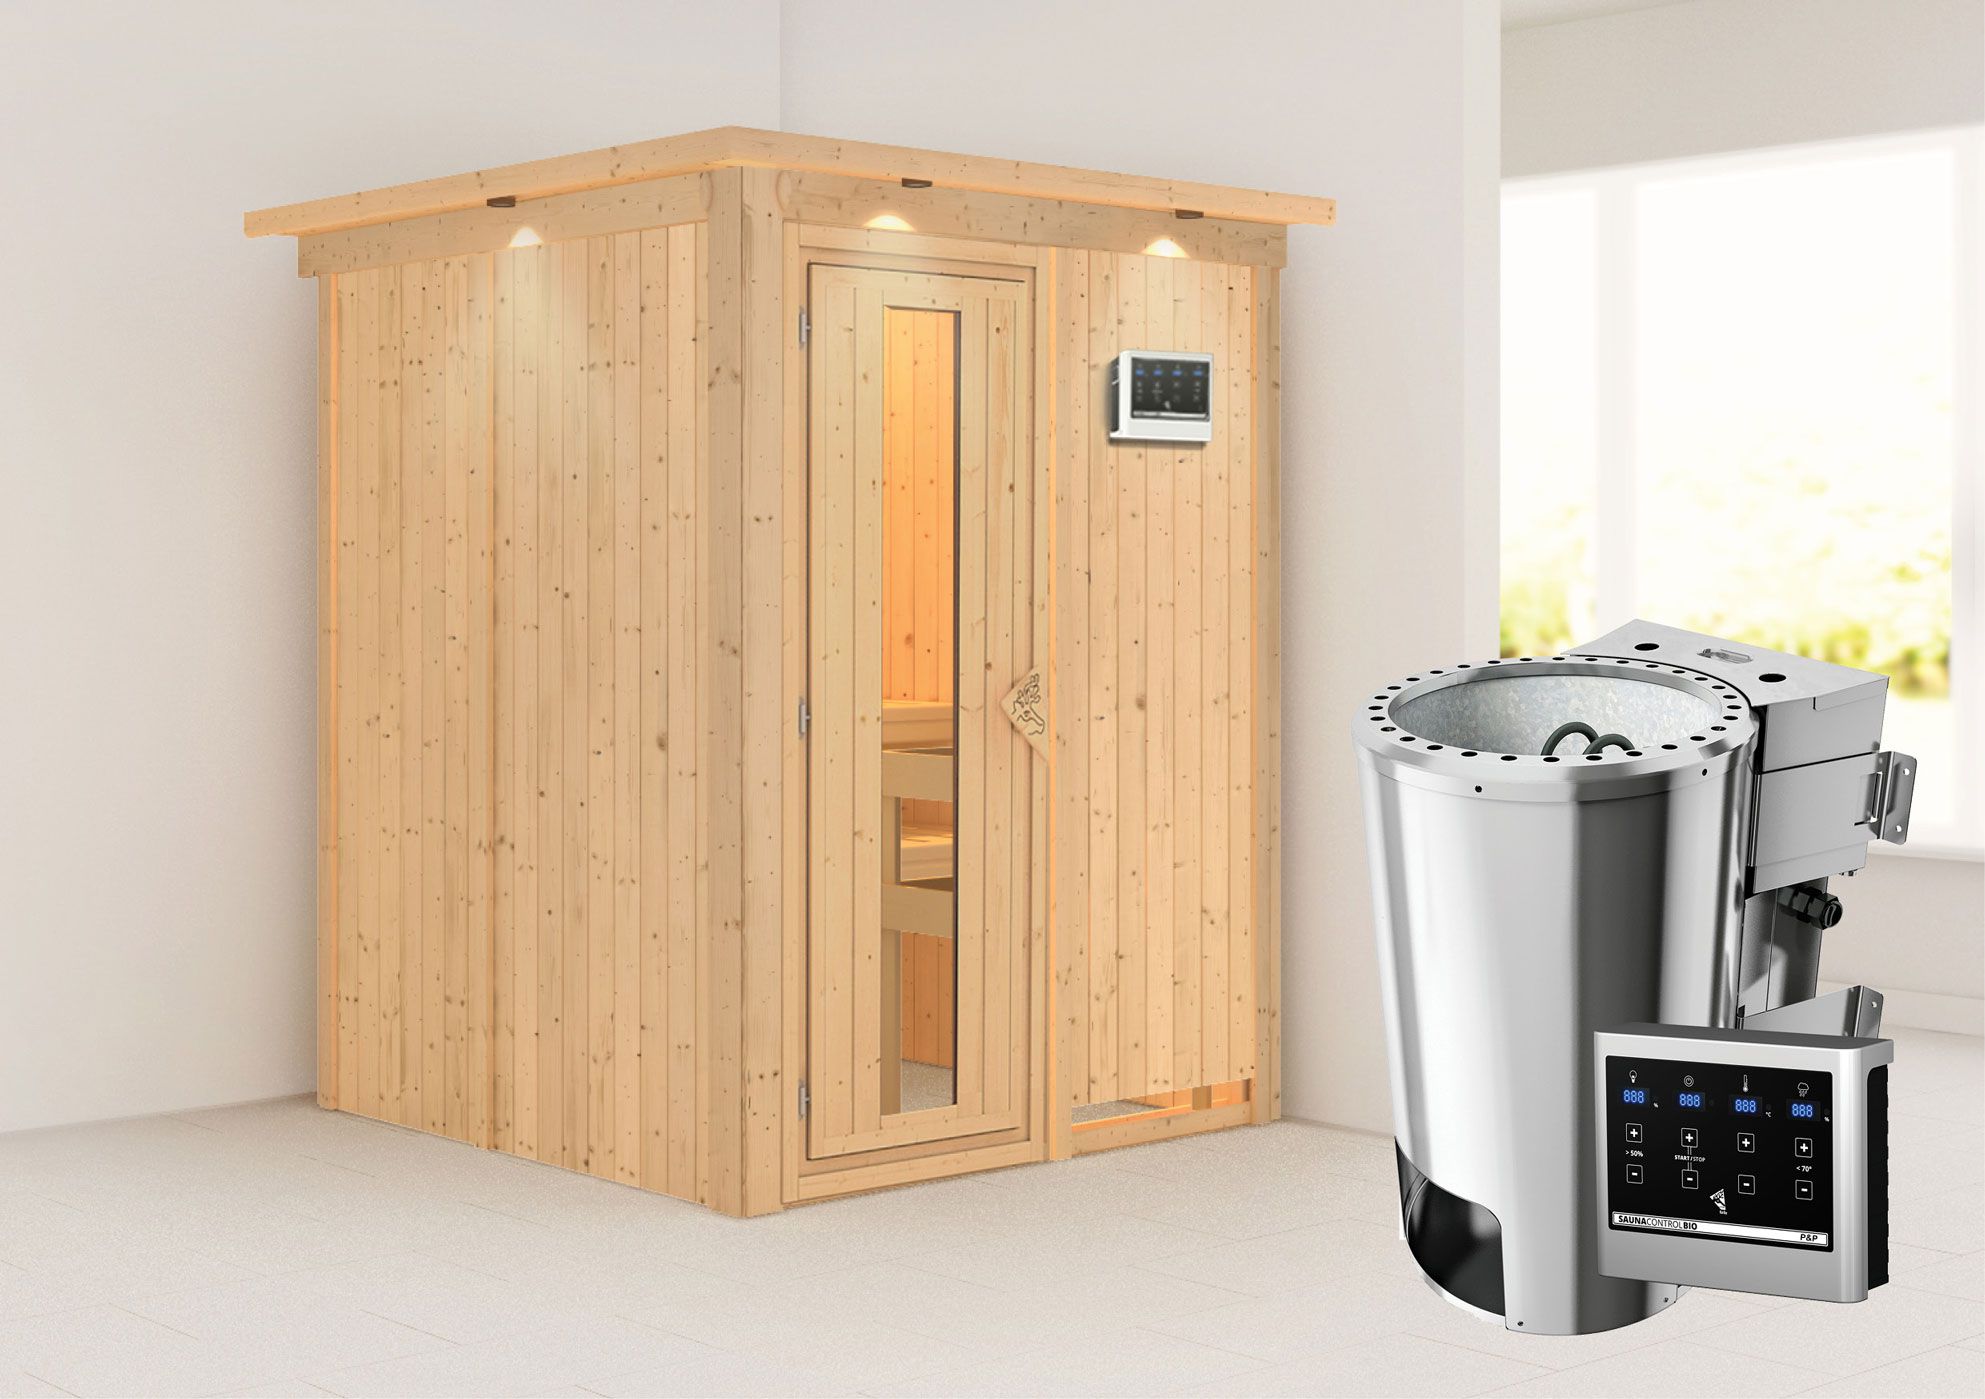 SET-sauna "Joran" met energiebesparende deur, rand en BIO 3,6 kW kachel - 165 x 165 x 202 cm (B x D x H)